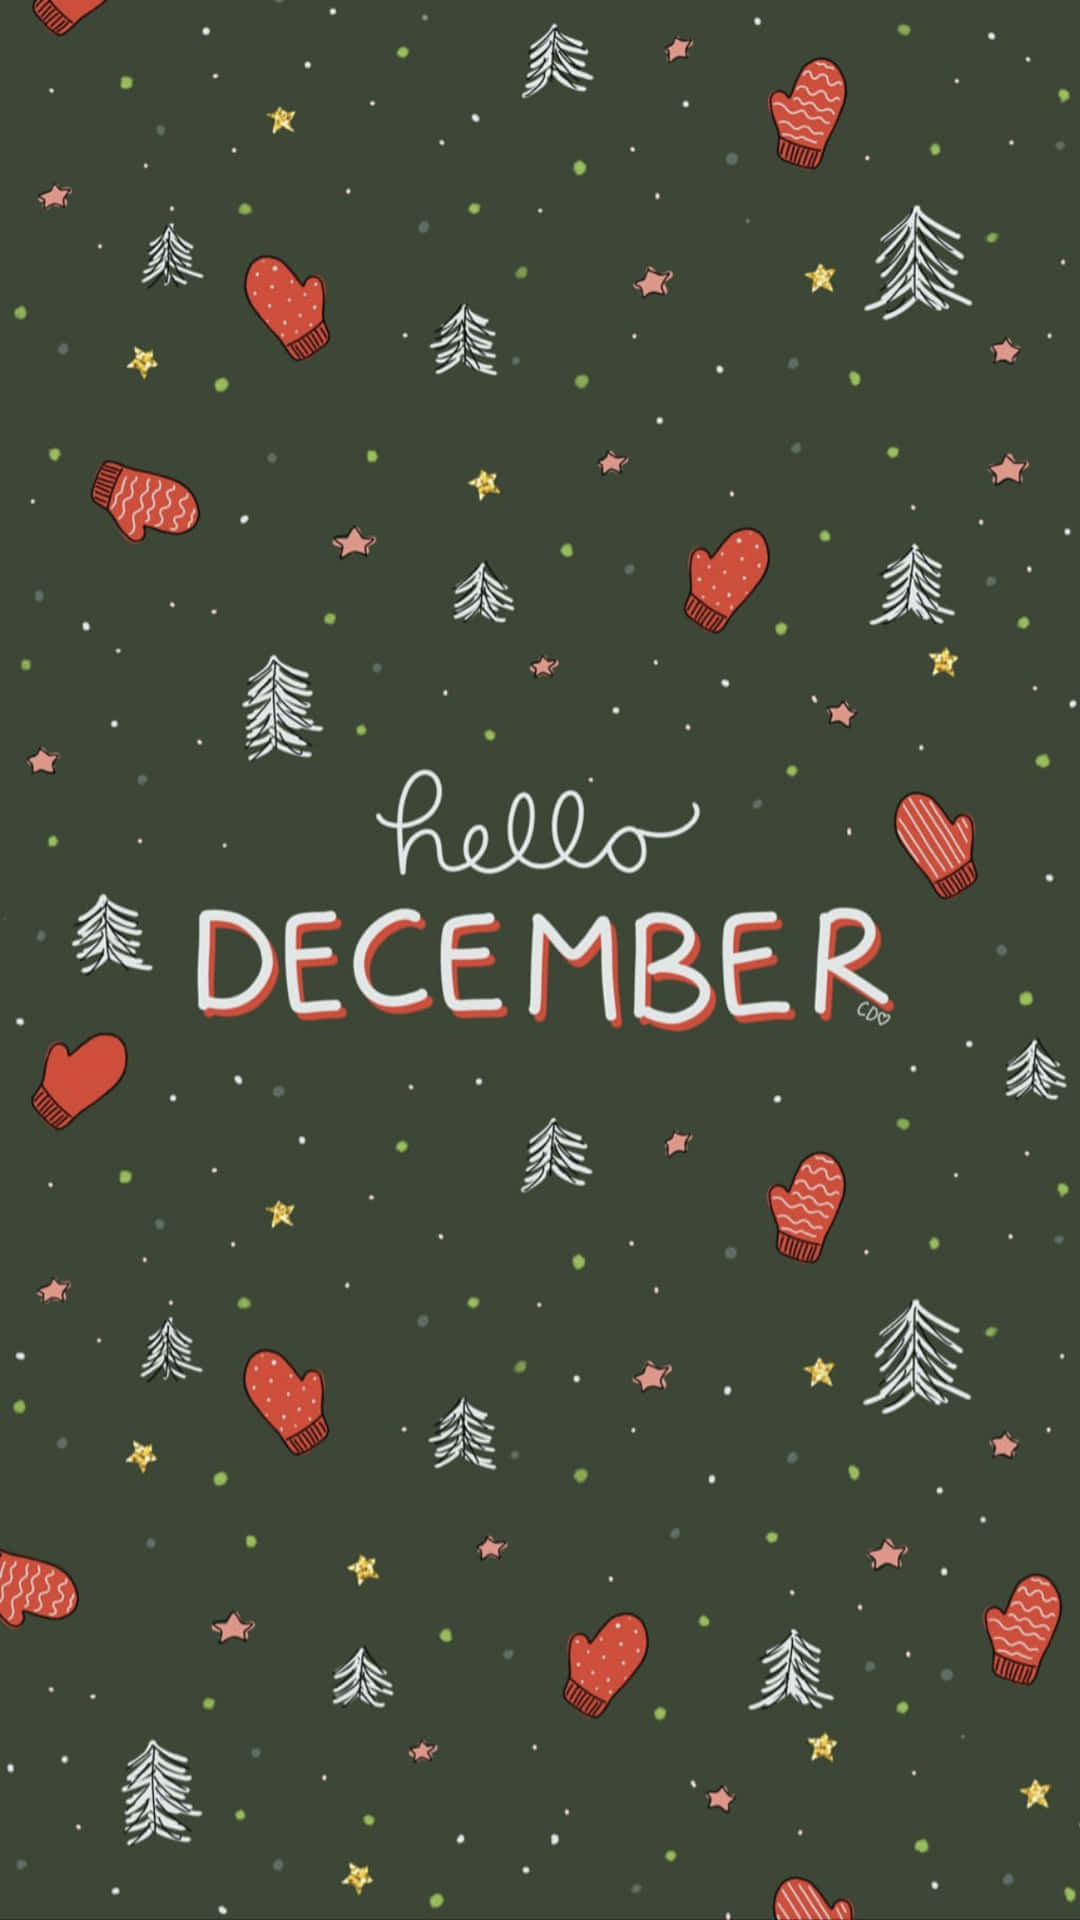 Say goodbye to November, and hello to December! Wallpaper